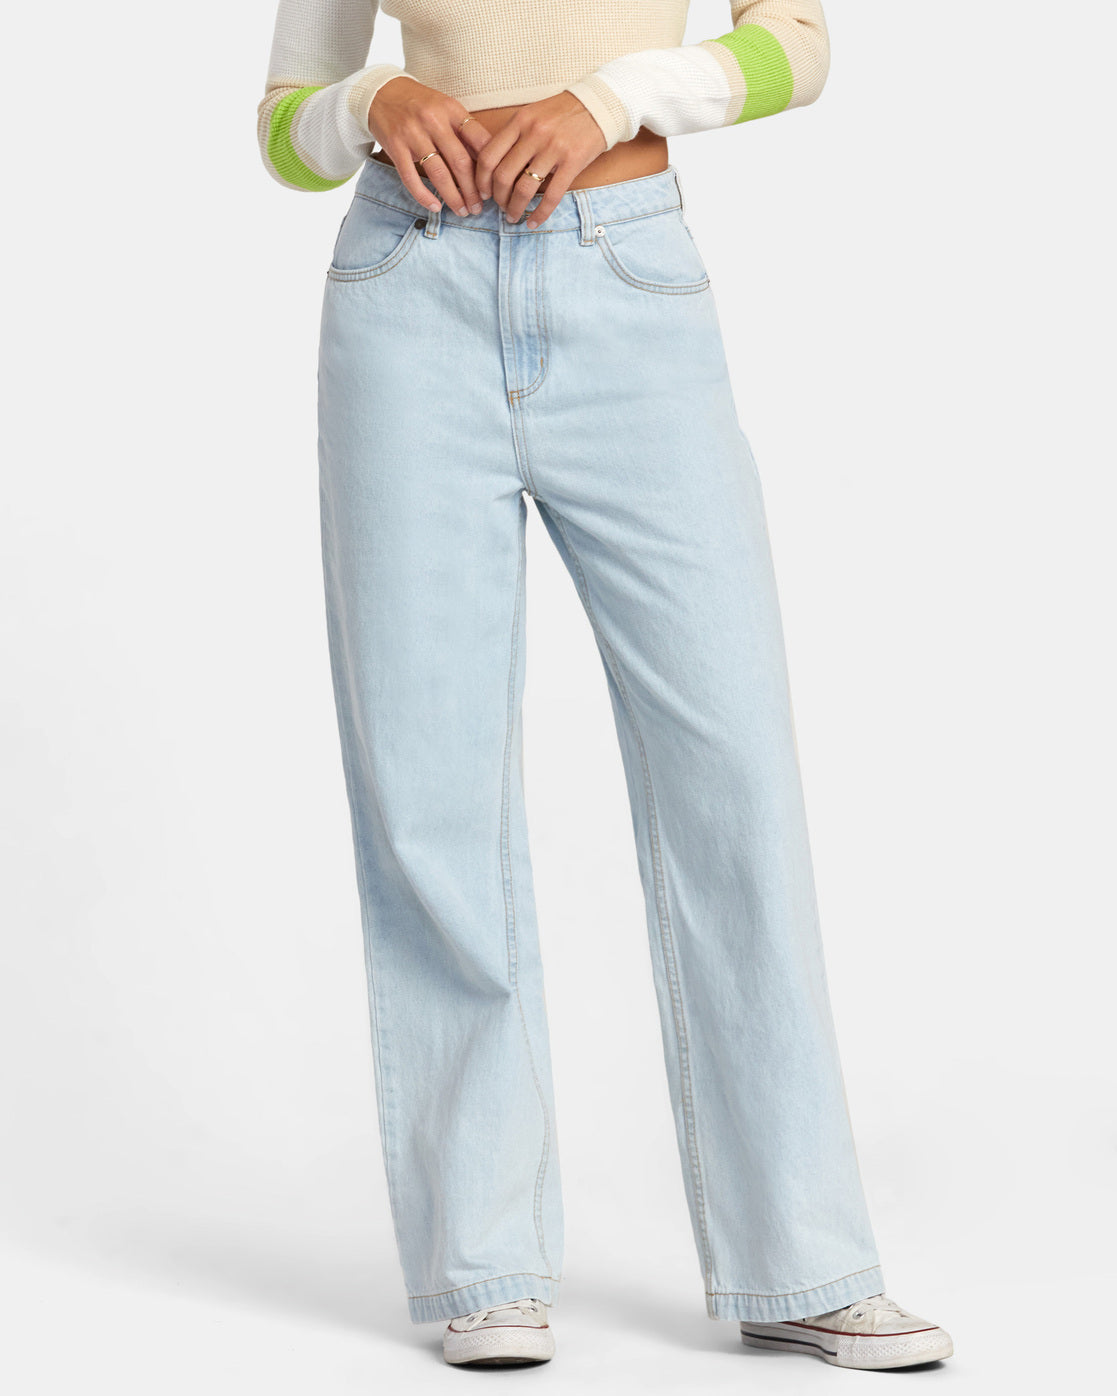 selvedge denim jeans dark blue wash made in usa size 32W 36L | eBay